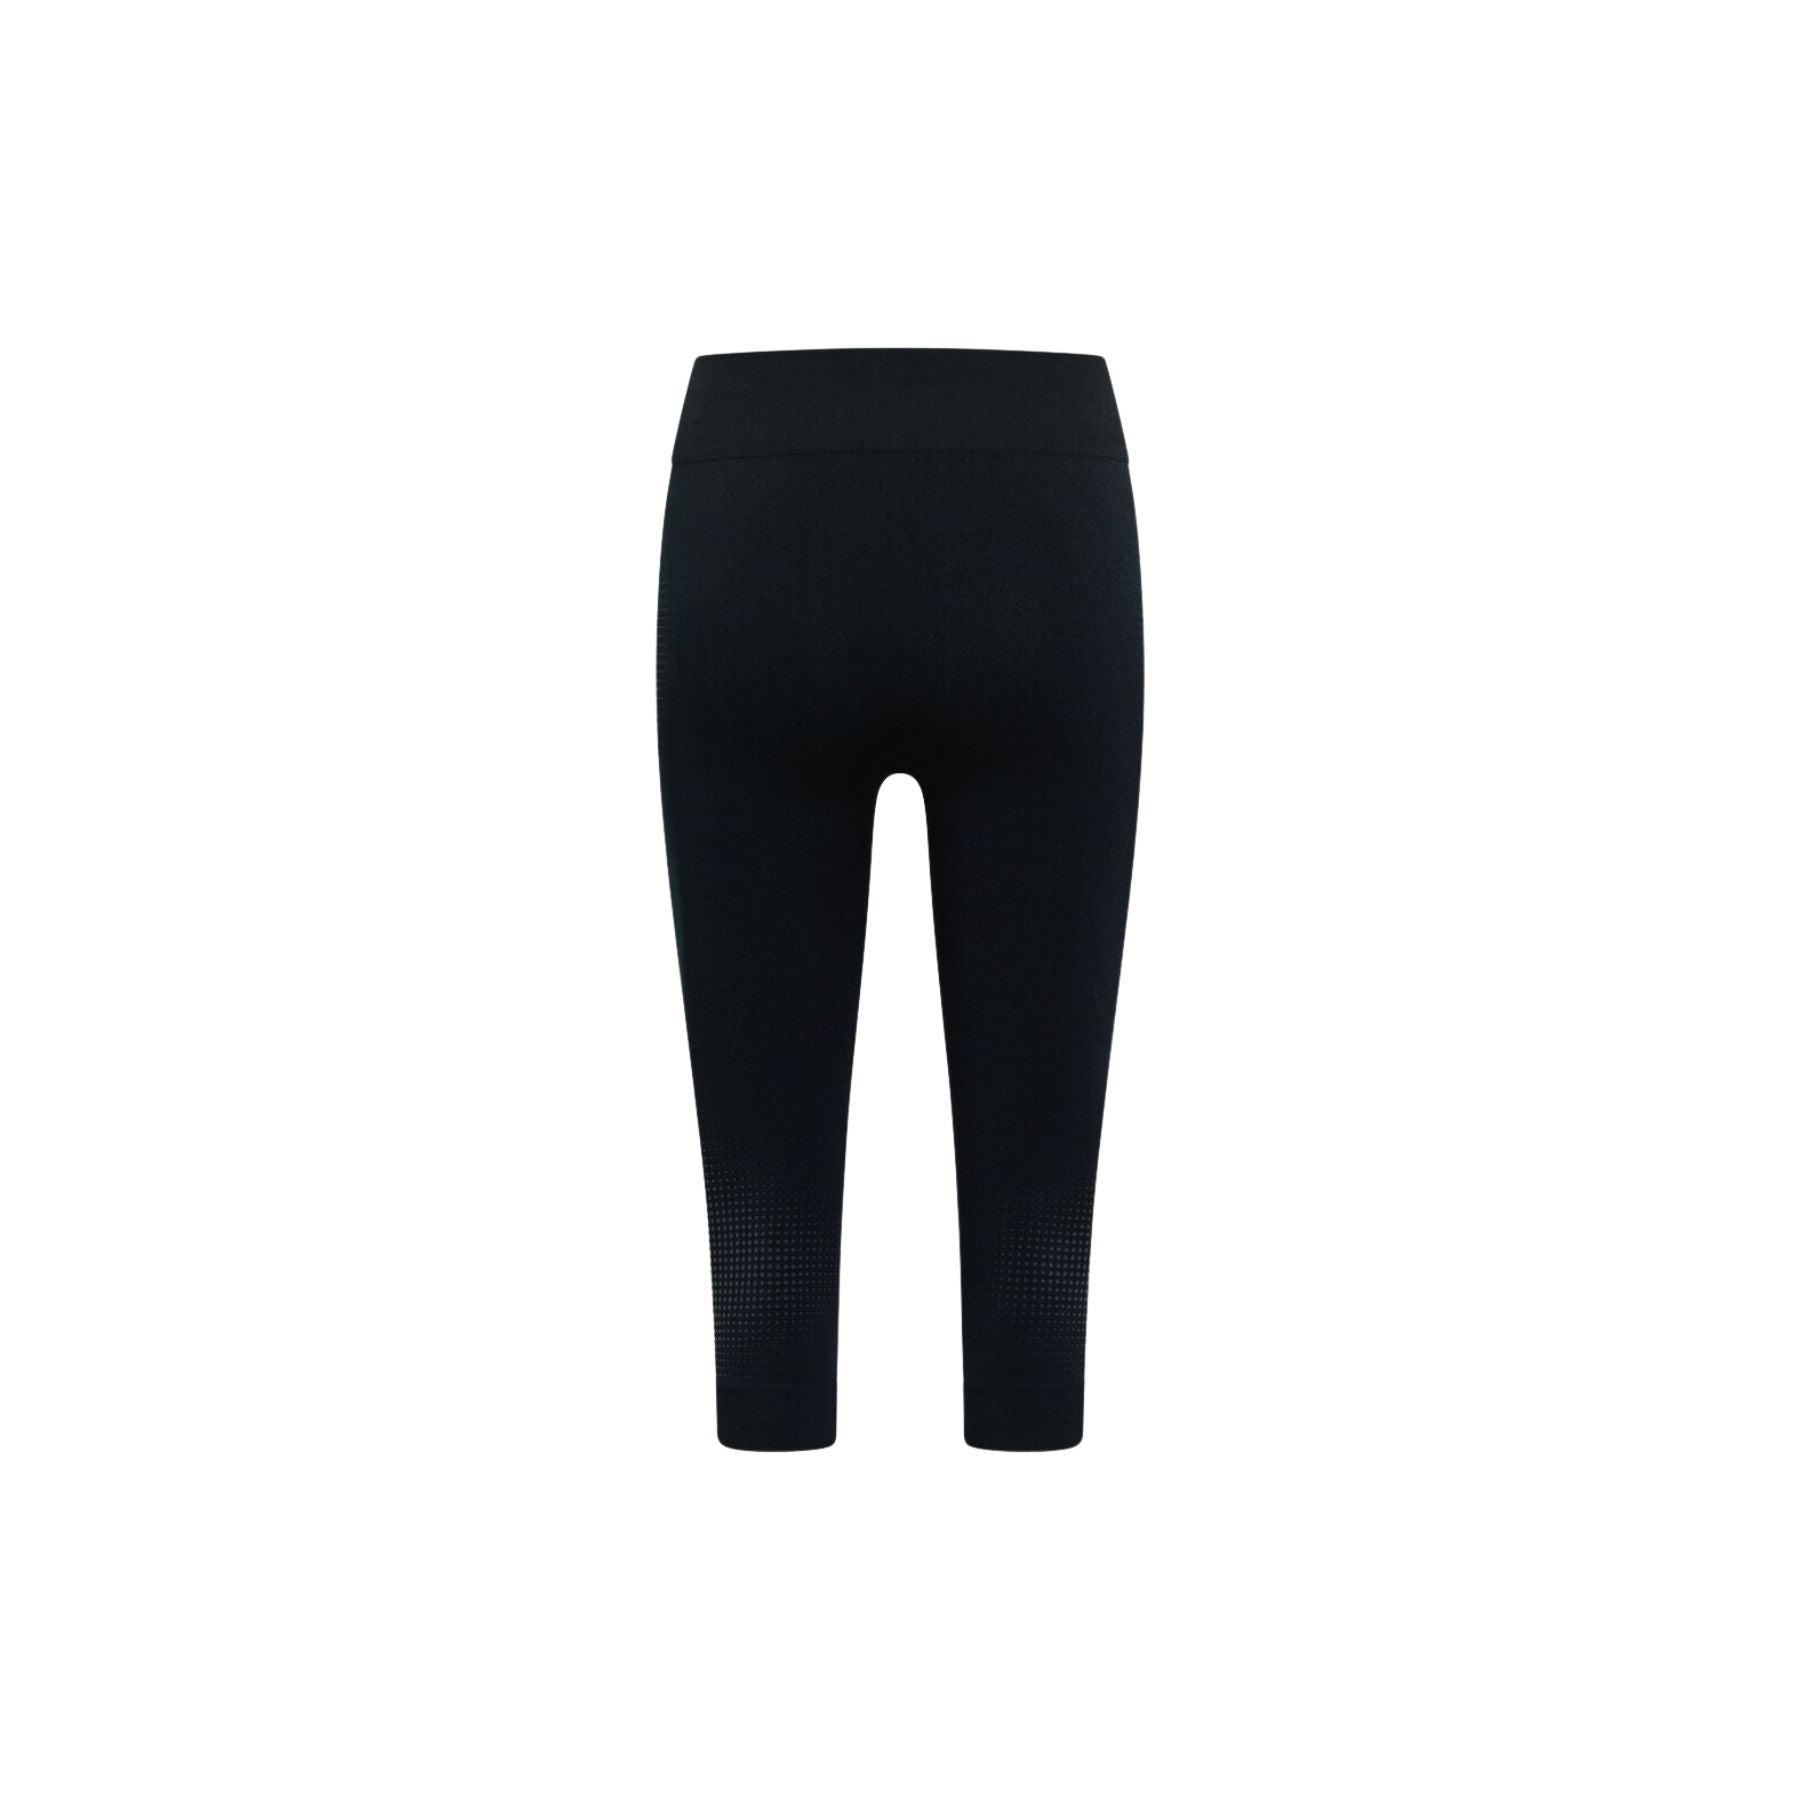 Odlo Women's Performance Warm Base Layer Bottom in Black/Graphite Grey